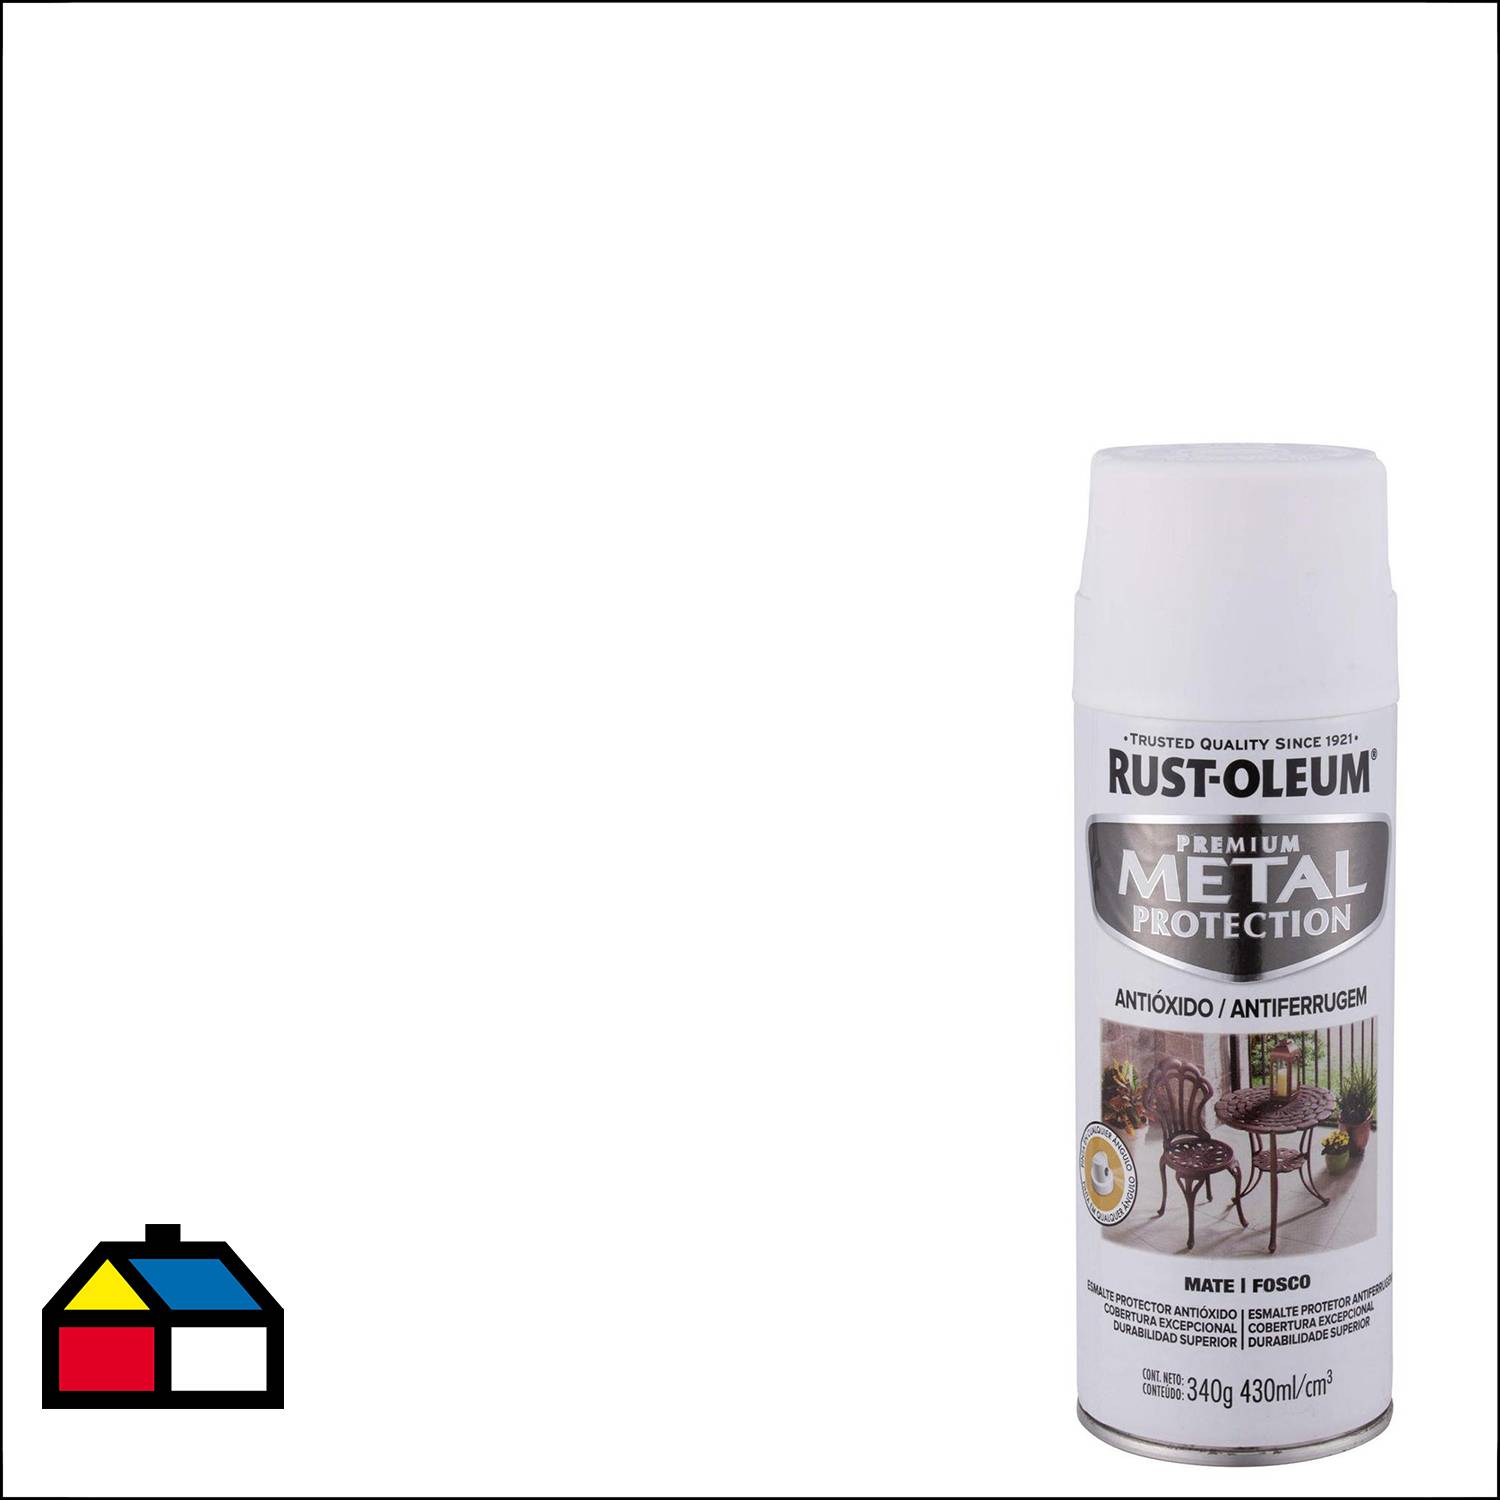 Pintura spray 430 ml Premium metal protection negro mate Rust-Oleum